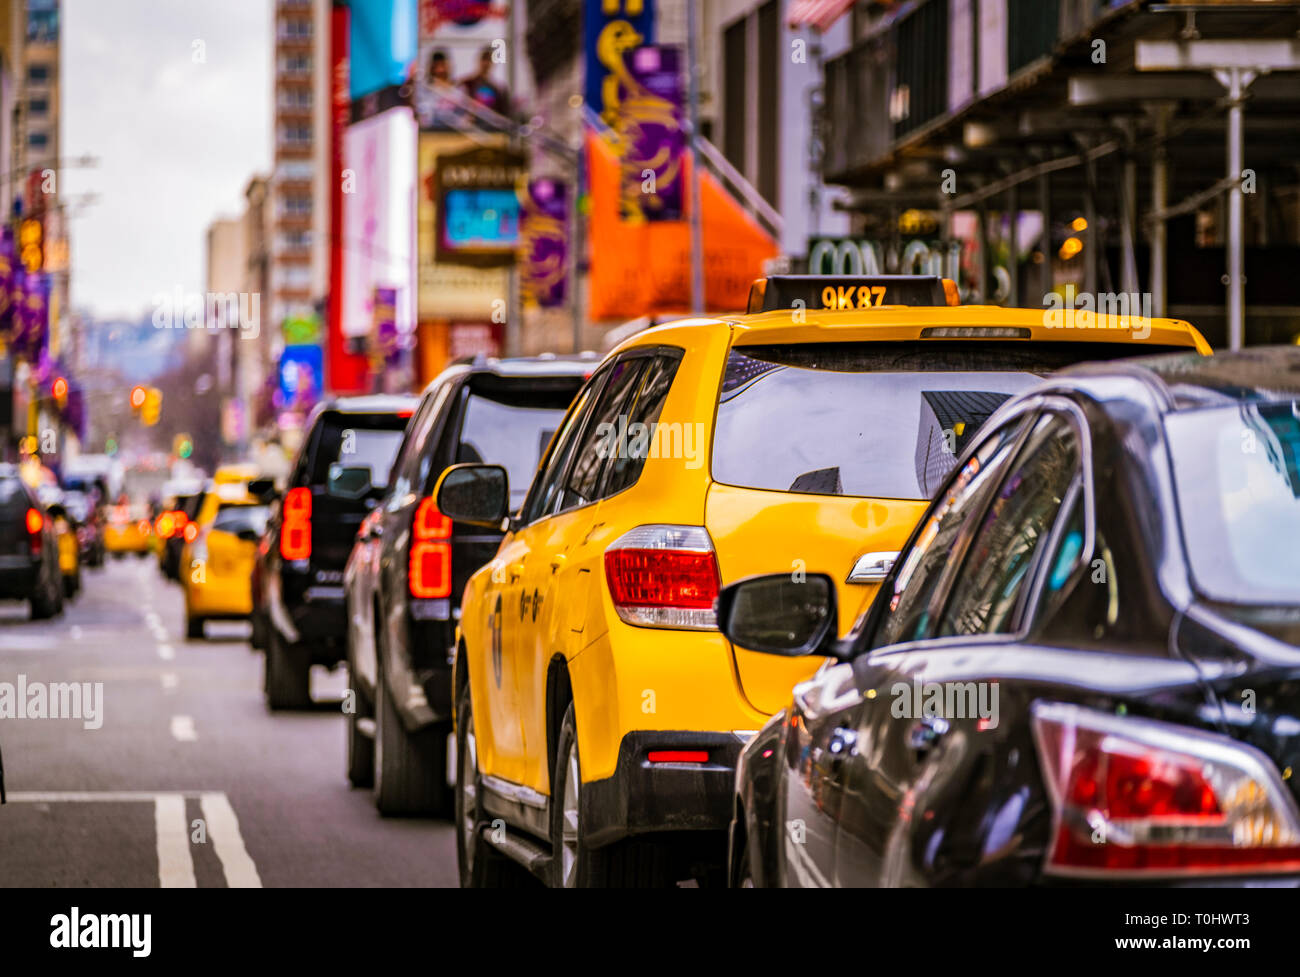 Typisch New York City Street View Stockfoto